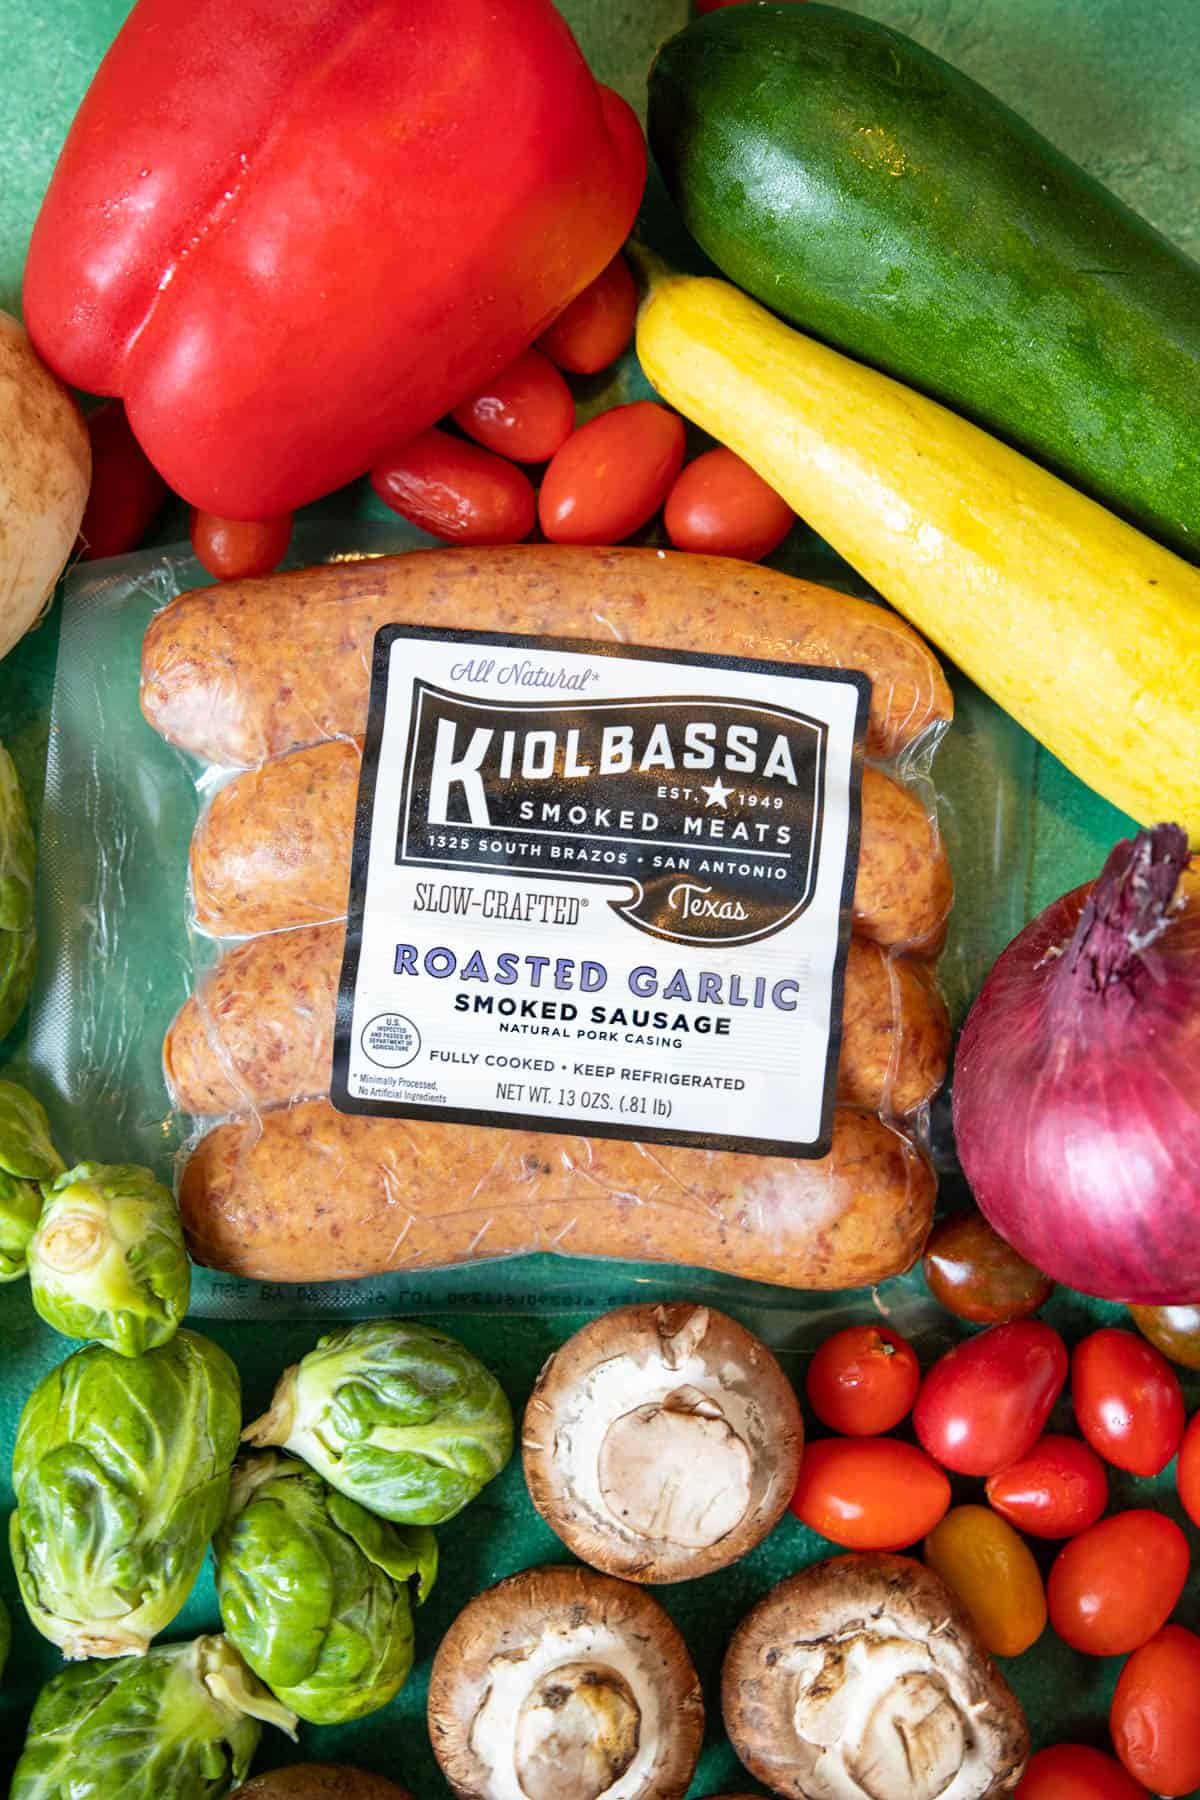 Kiolbassa Packaging surrounded by veggies